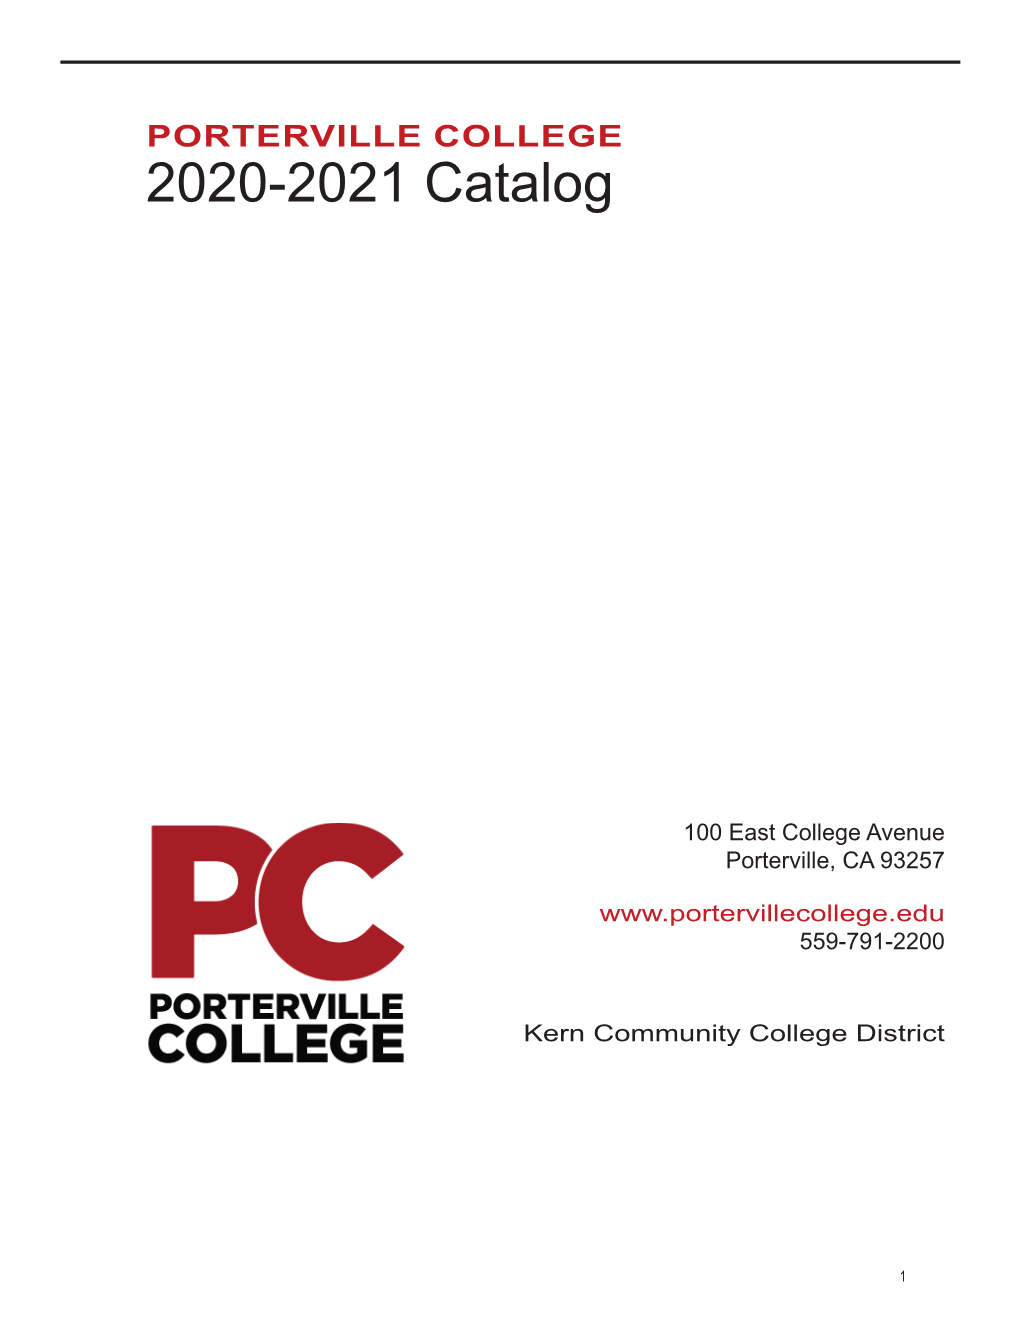 Porterville College Catalog